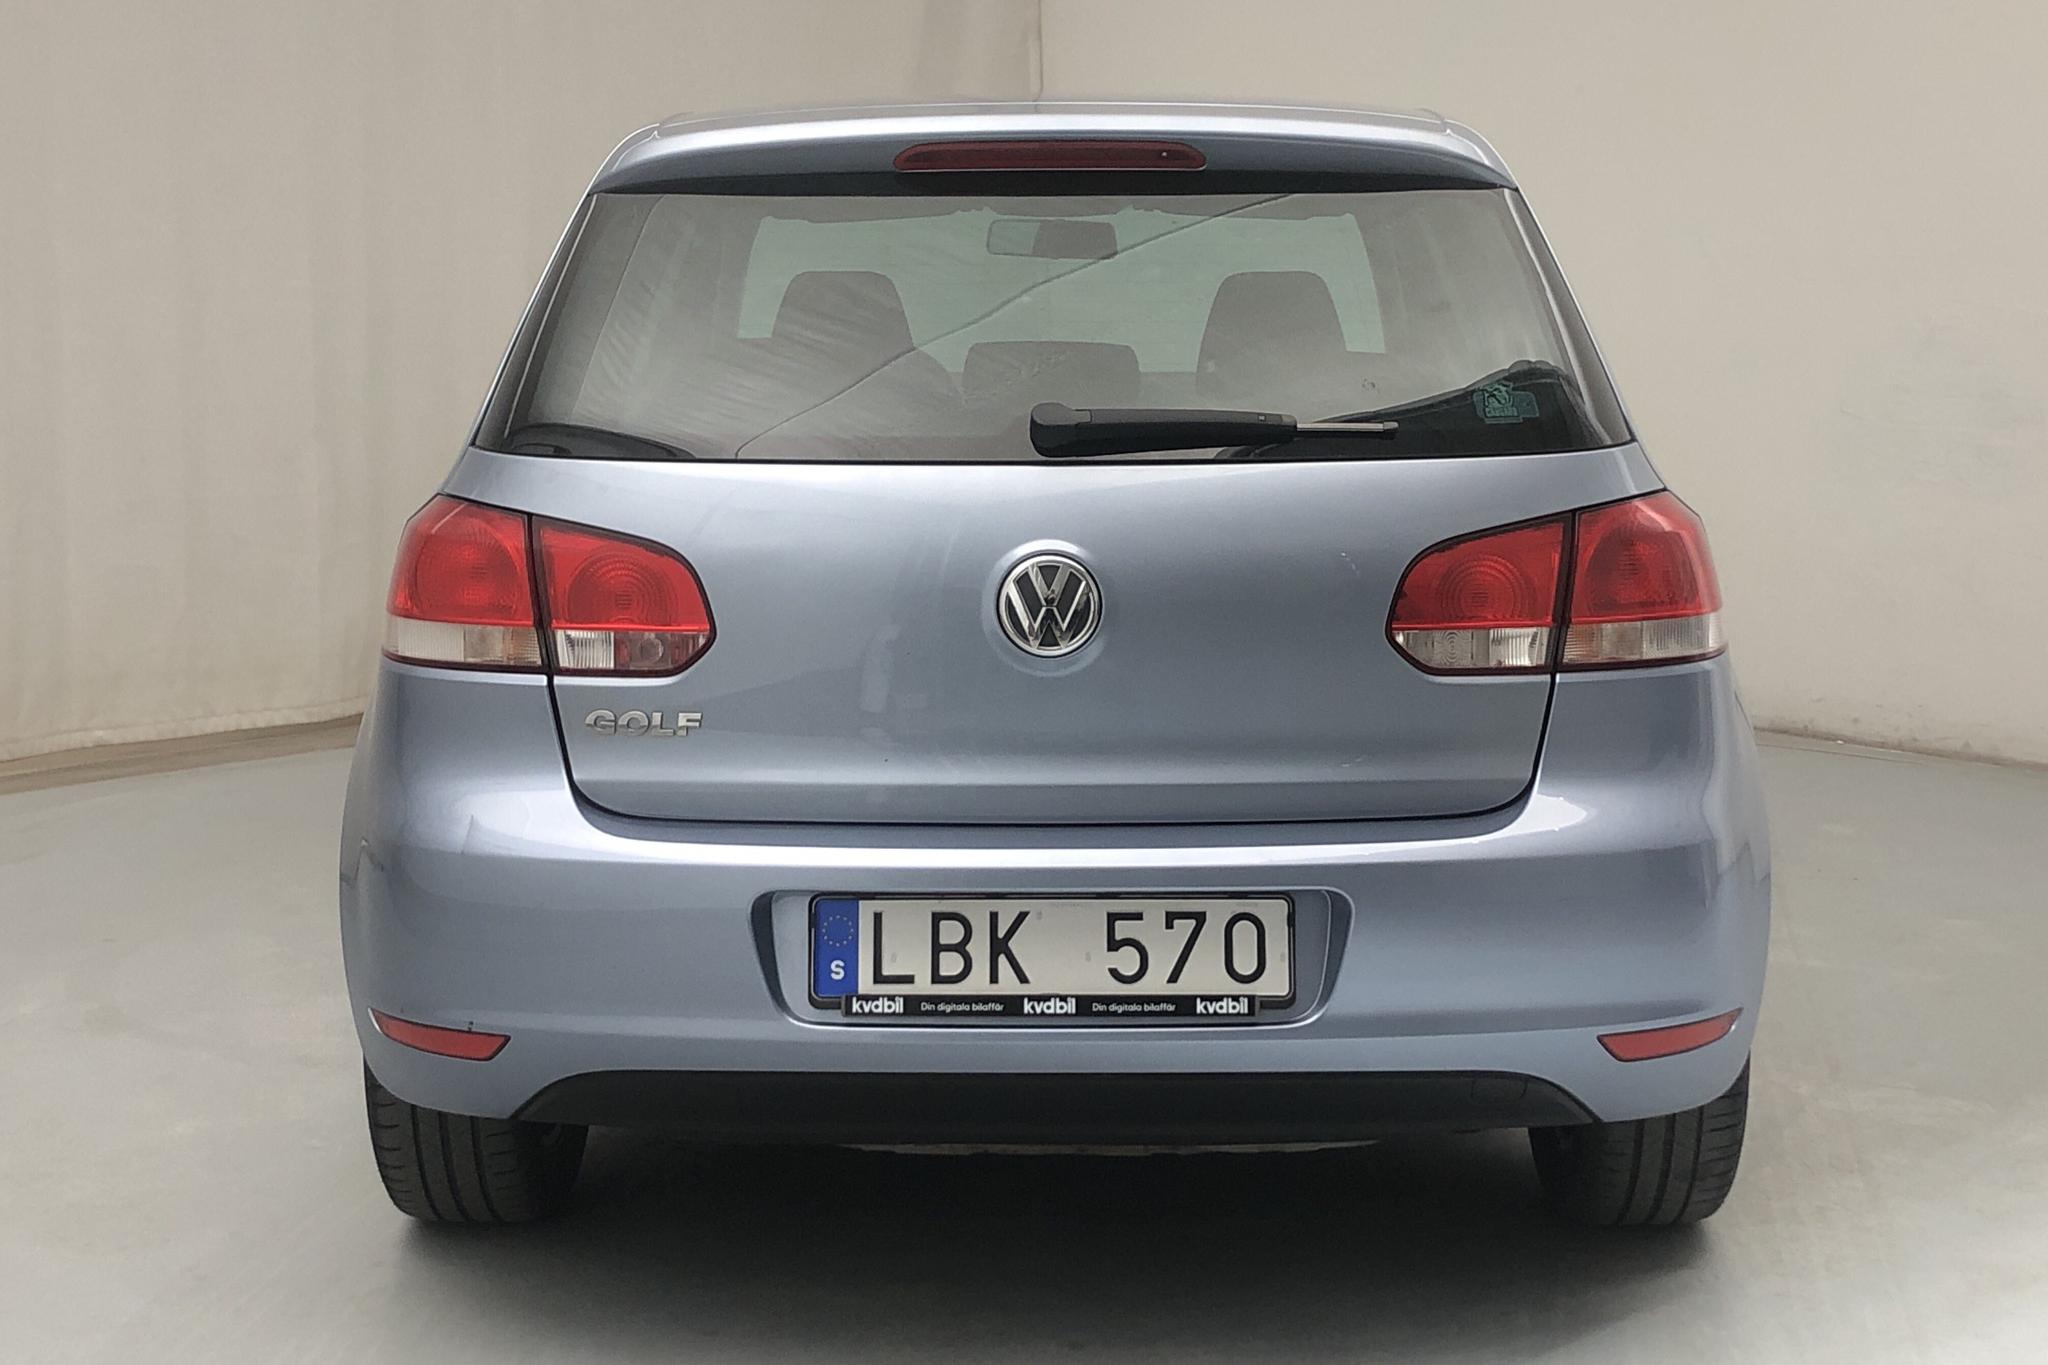 VW Golf VI 1.6 MultiFuel E85 5dr (102hk) - 13 059 mil - Manuell - Light Blue - 2011